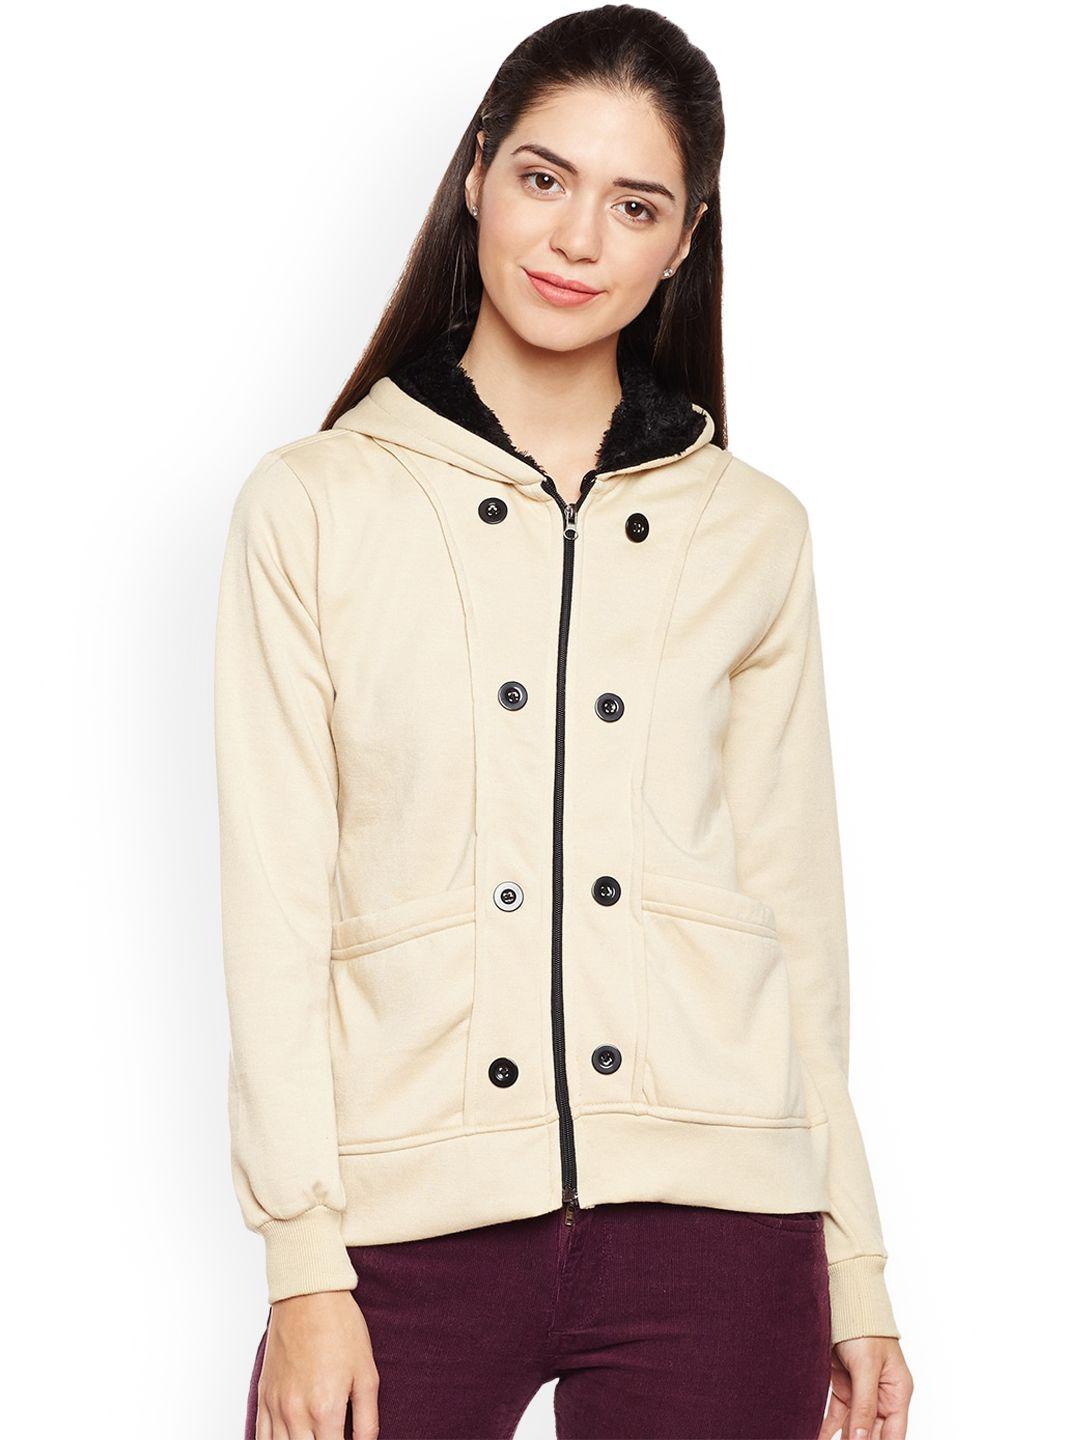 baesd hooded lightweight fleece open front jacket